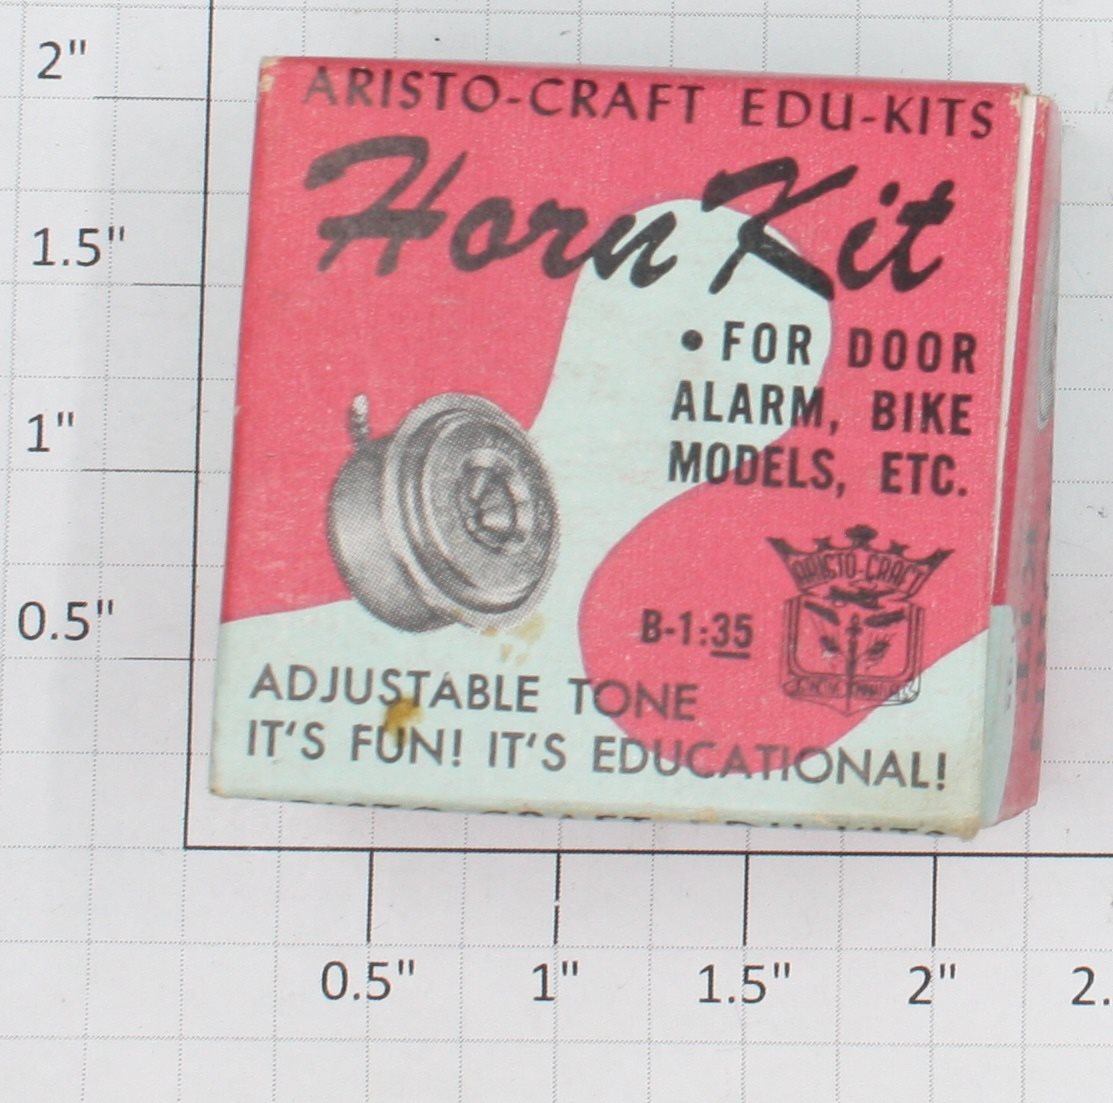 Aristo-Craft B1-35 Adjustable Horn Kit